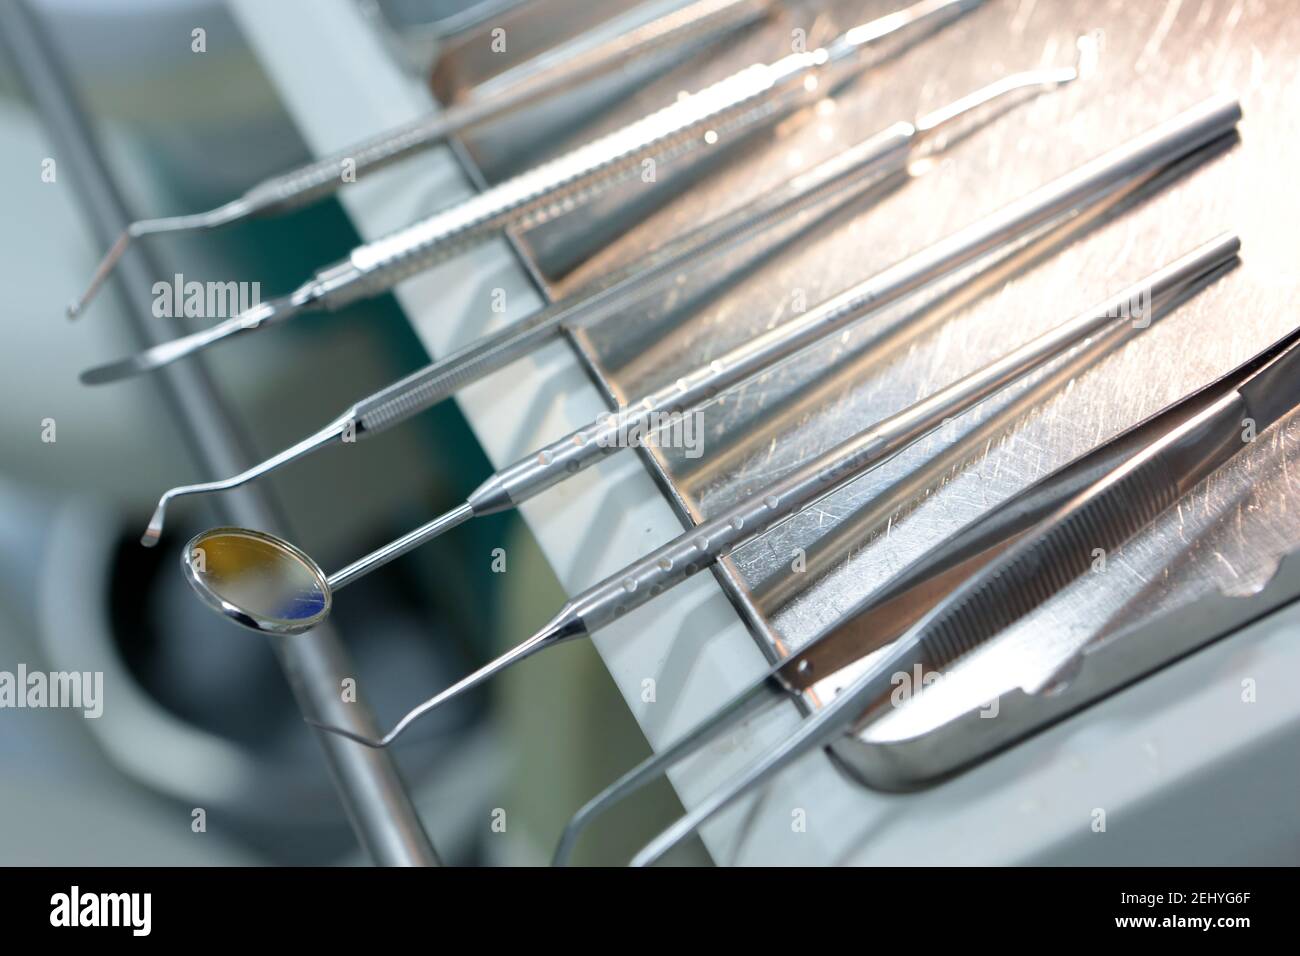 Dettaglio degli utensili dentisti su un vassoio metallico Foto Stock